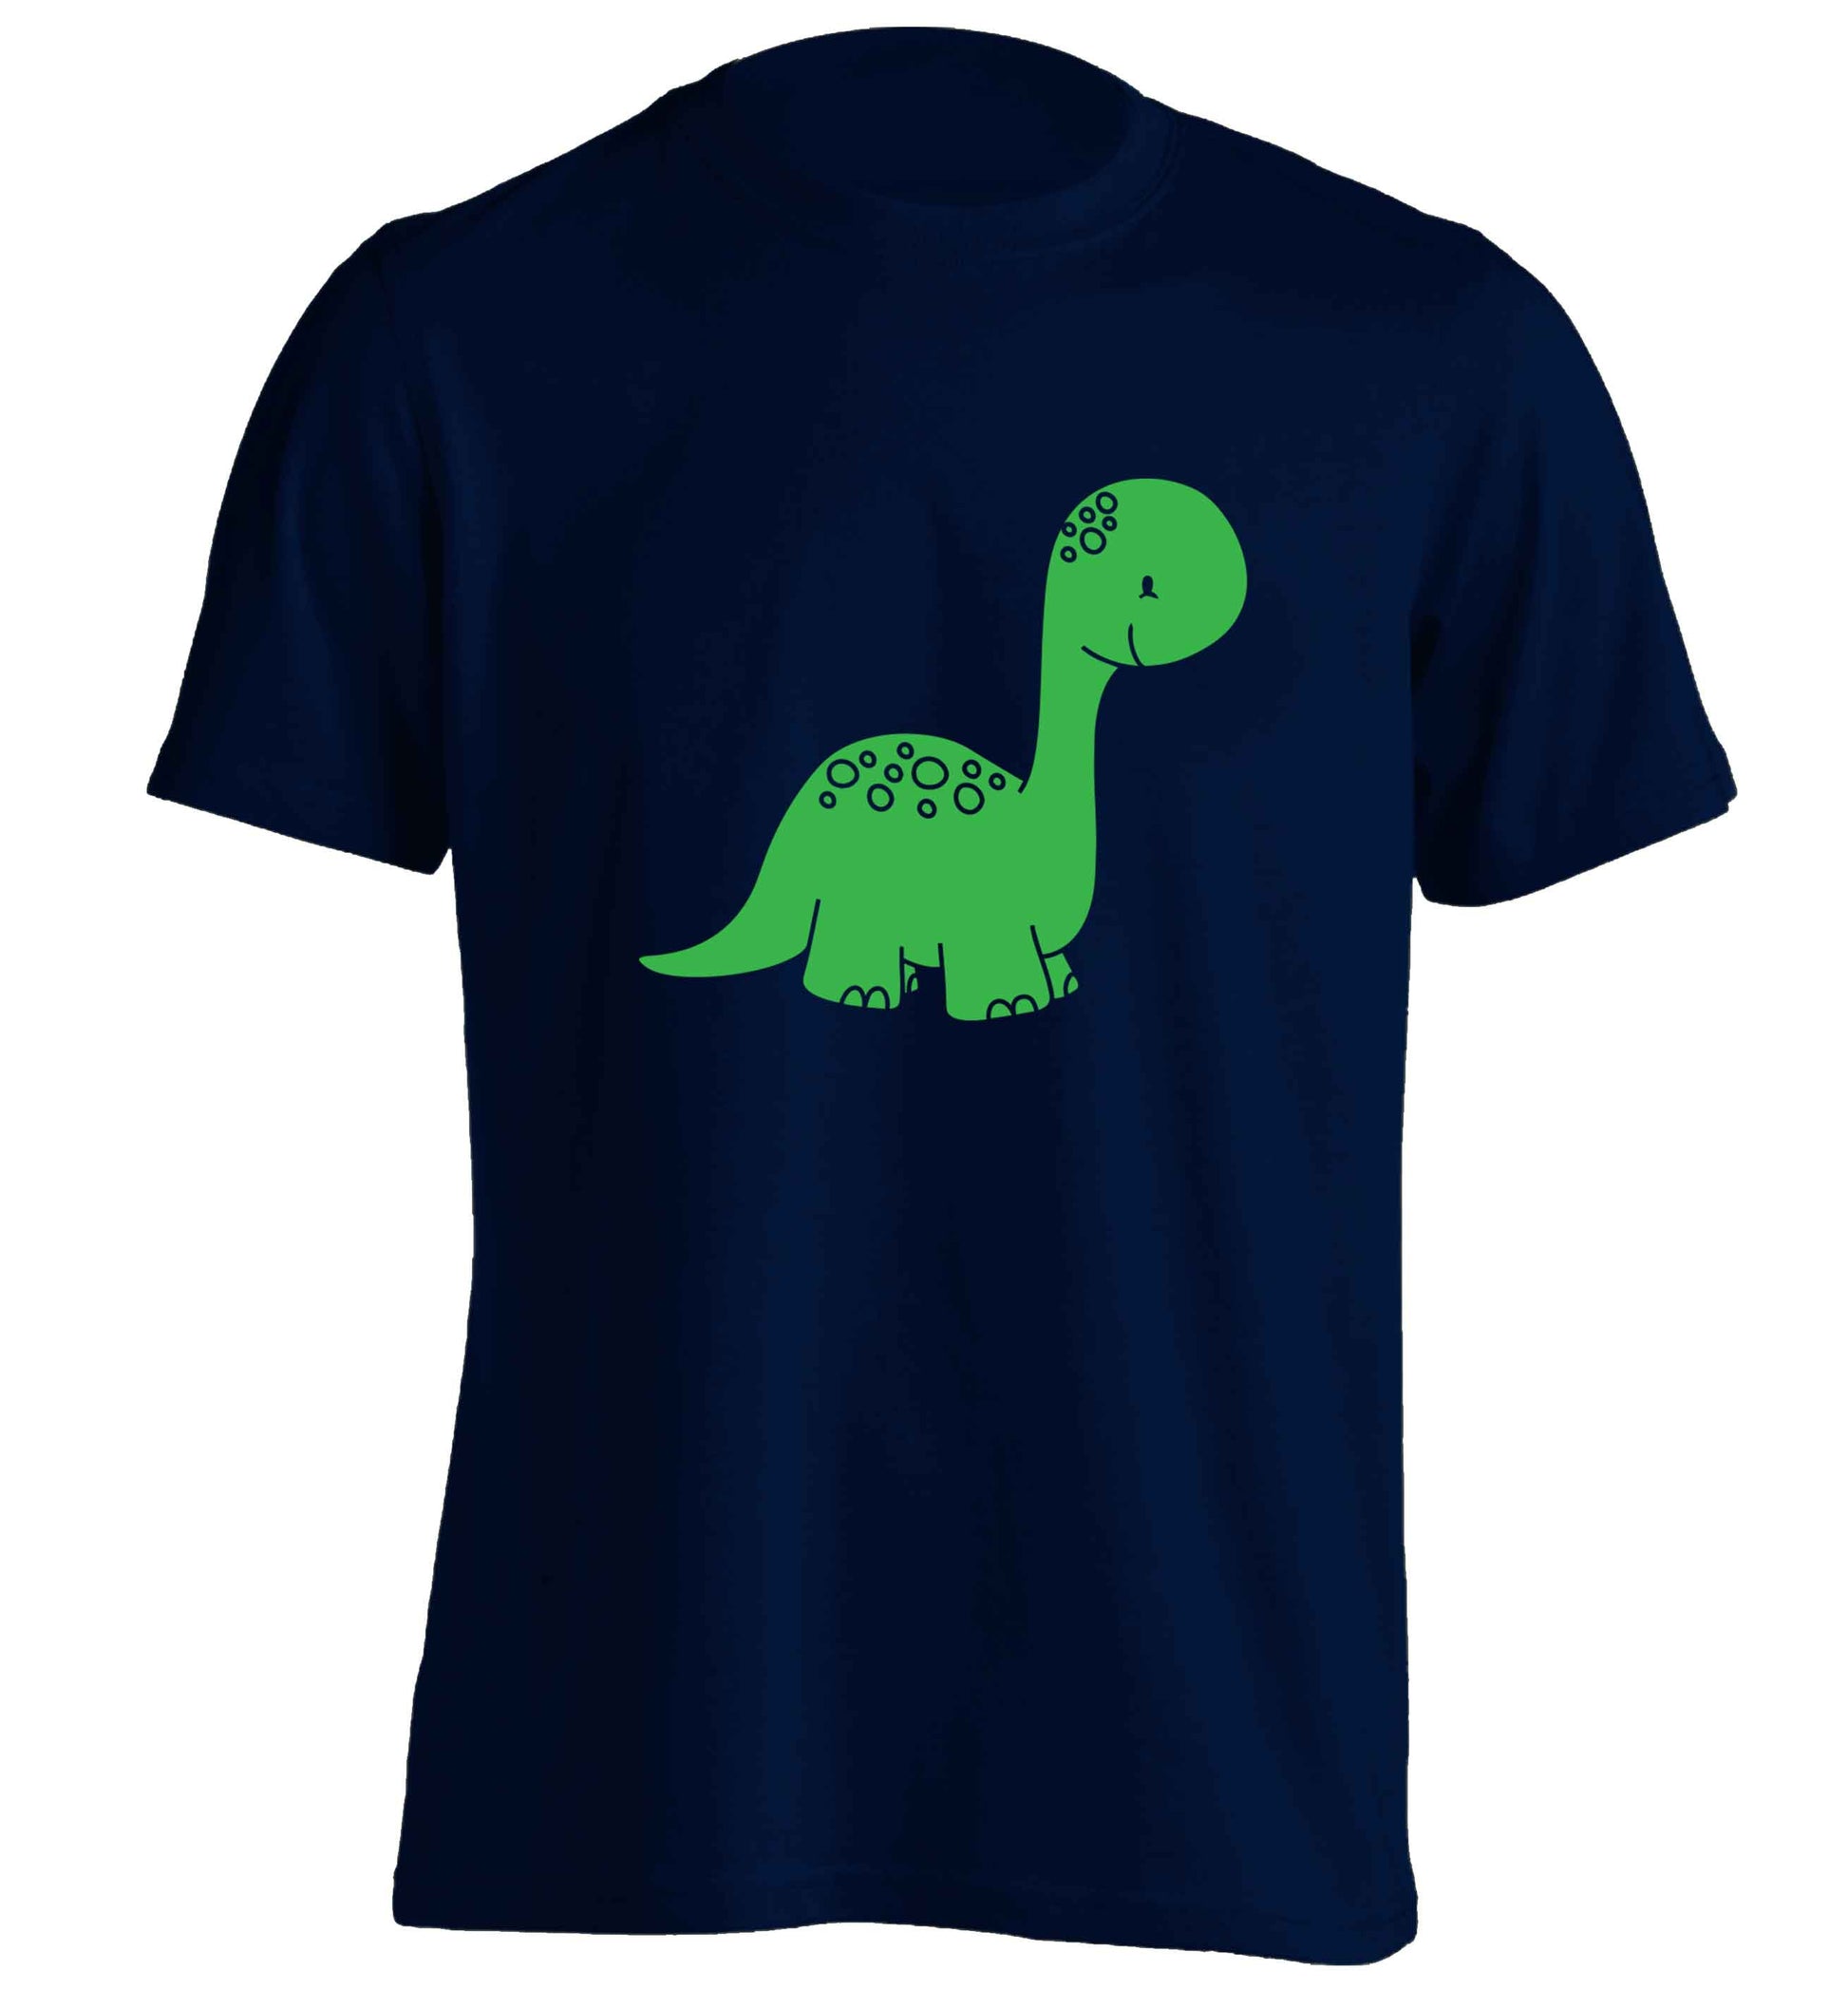 Dinosaur illustration adults unisex navy Tshirt 2XL